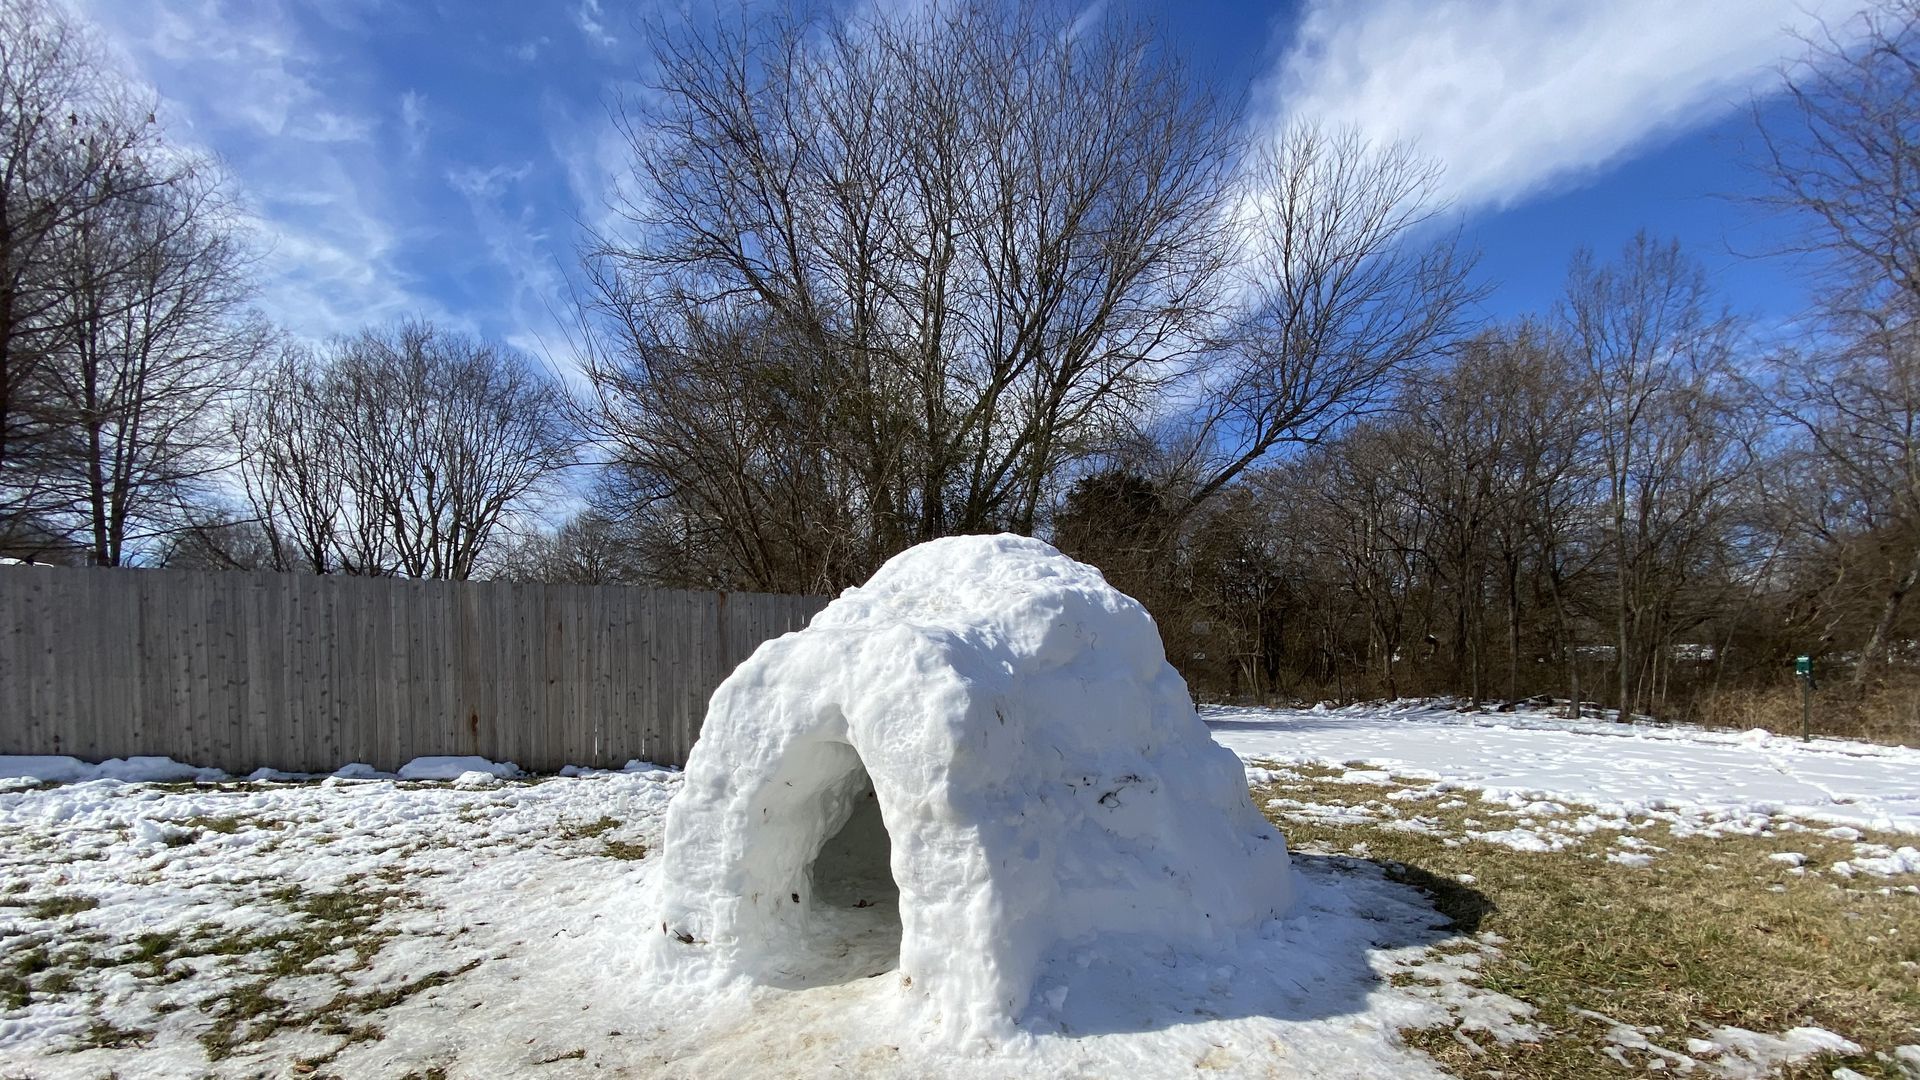 An igloo sits on grass half hidden by snow